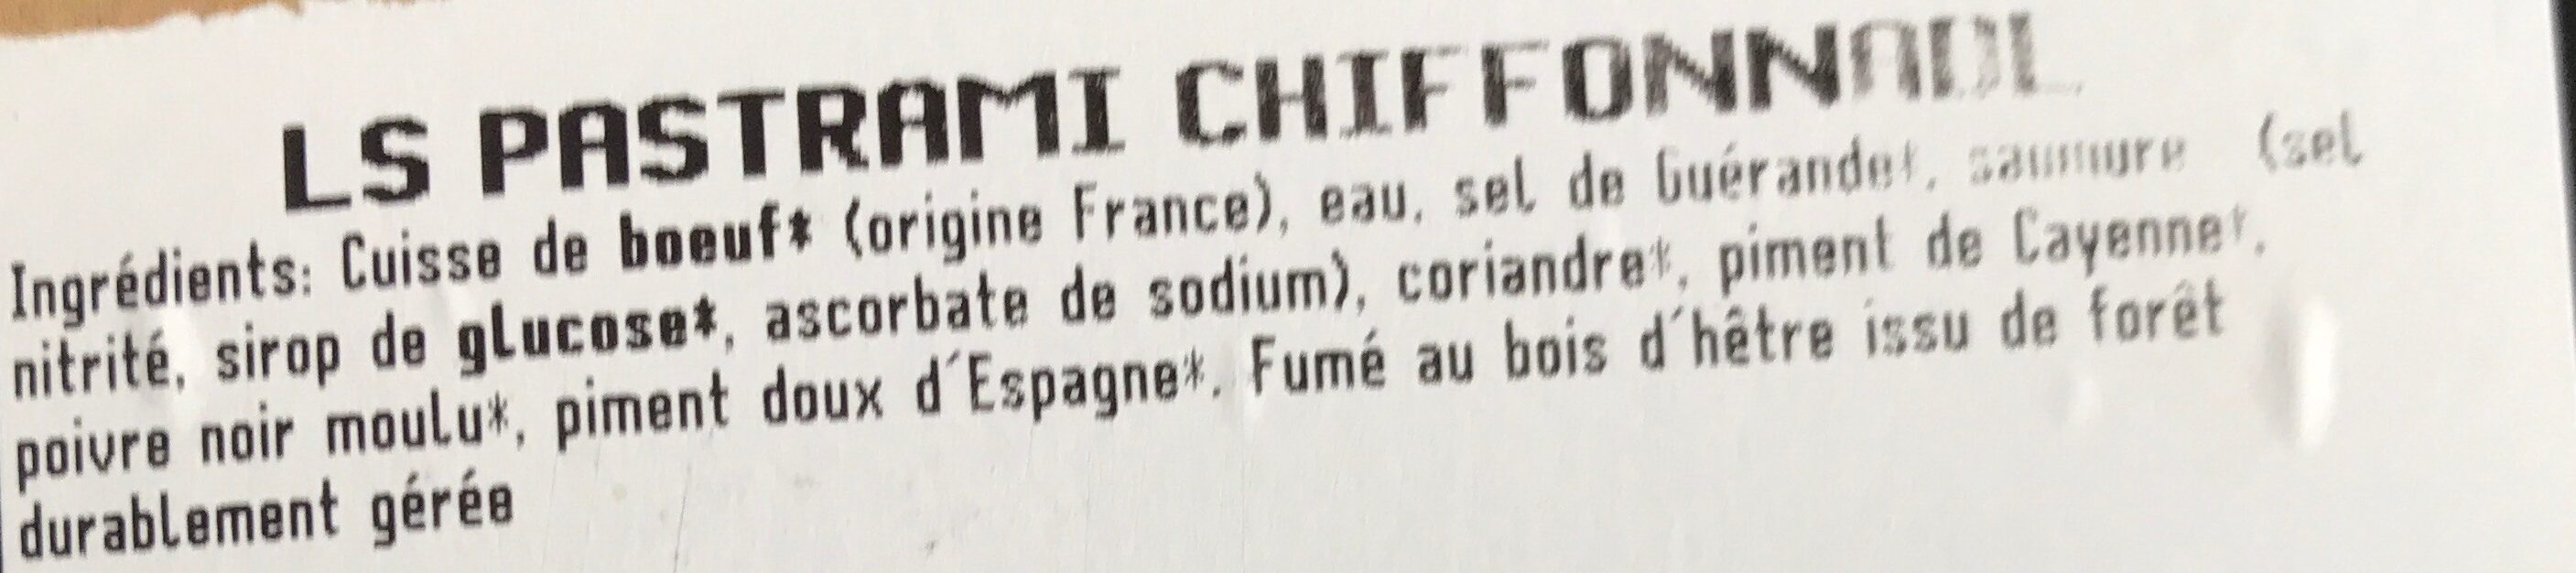 Pastrami chiffonnade - Ingrediënten - fr